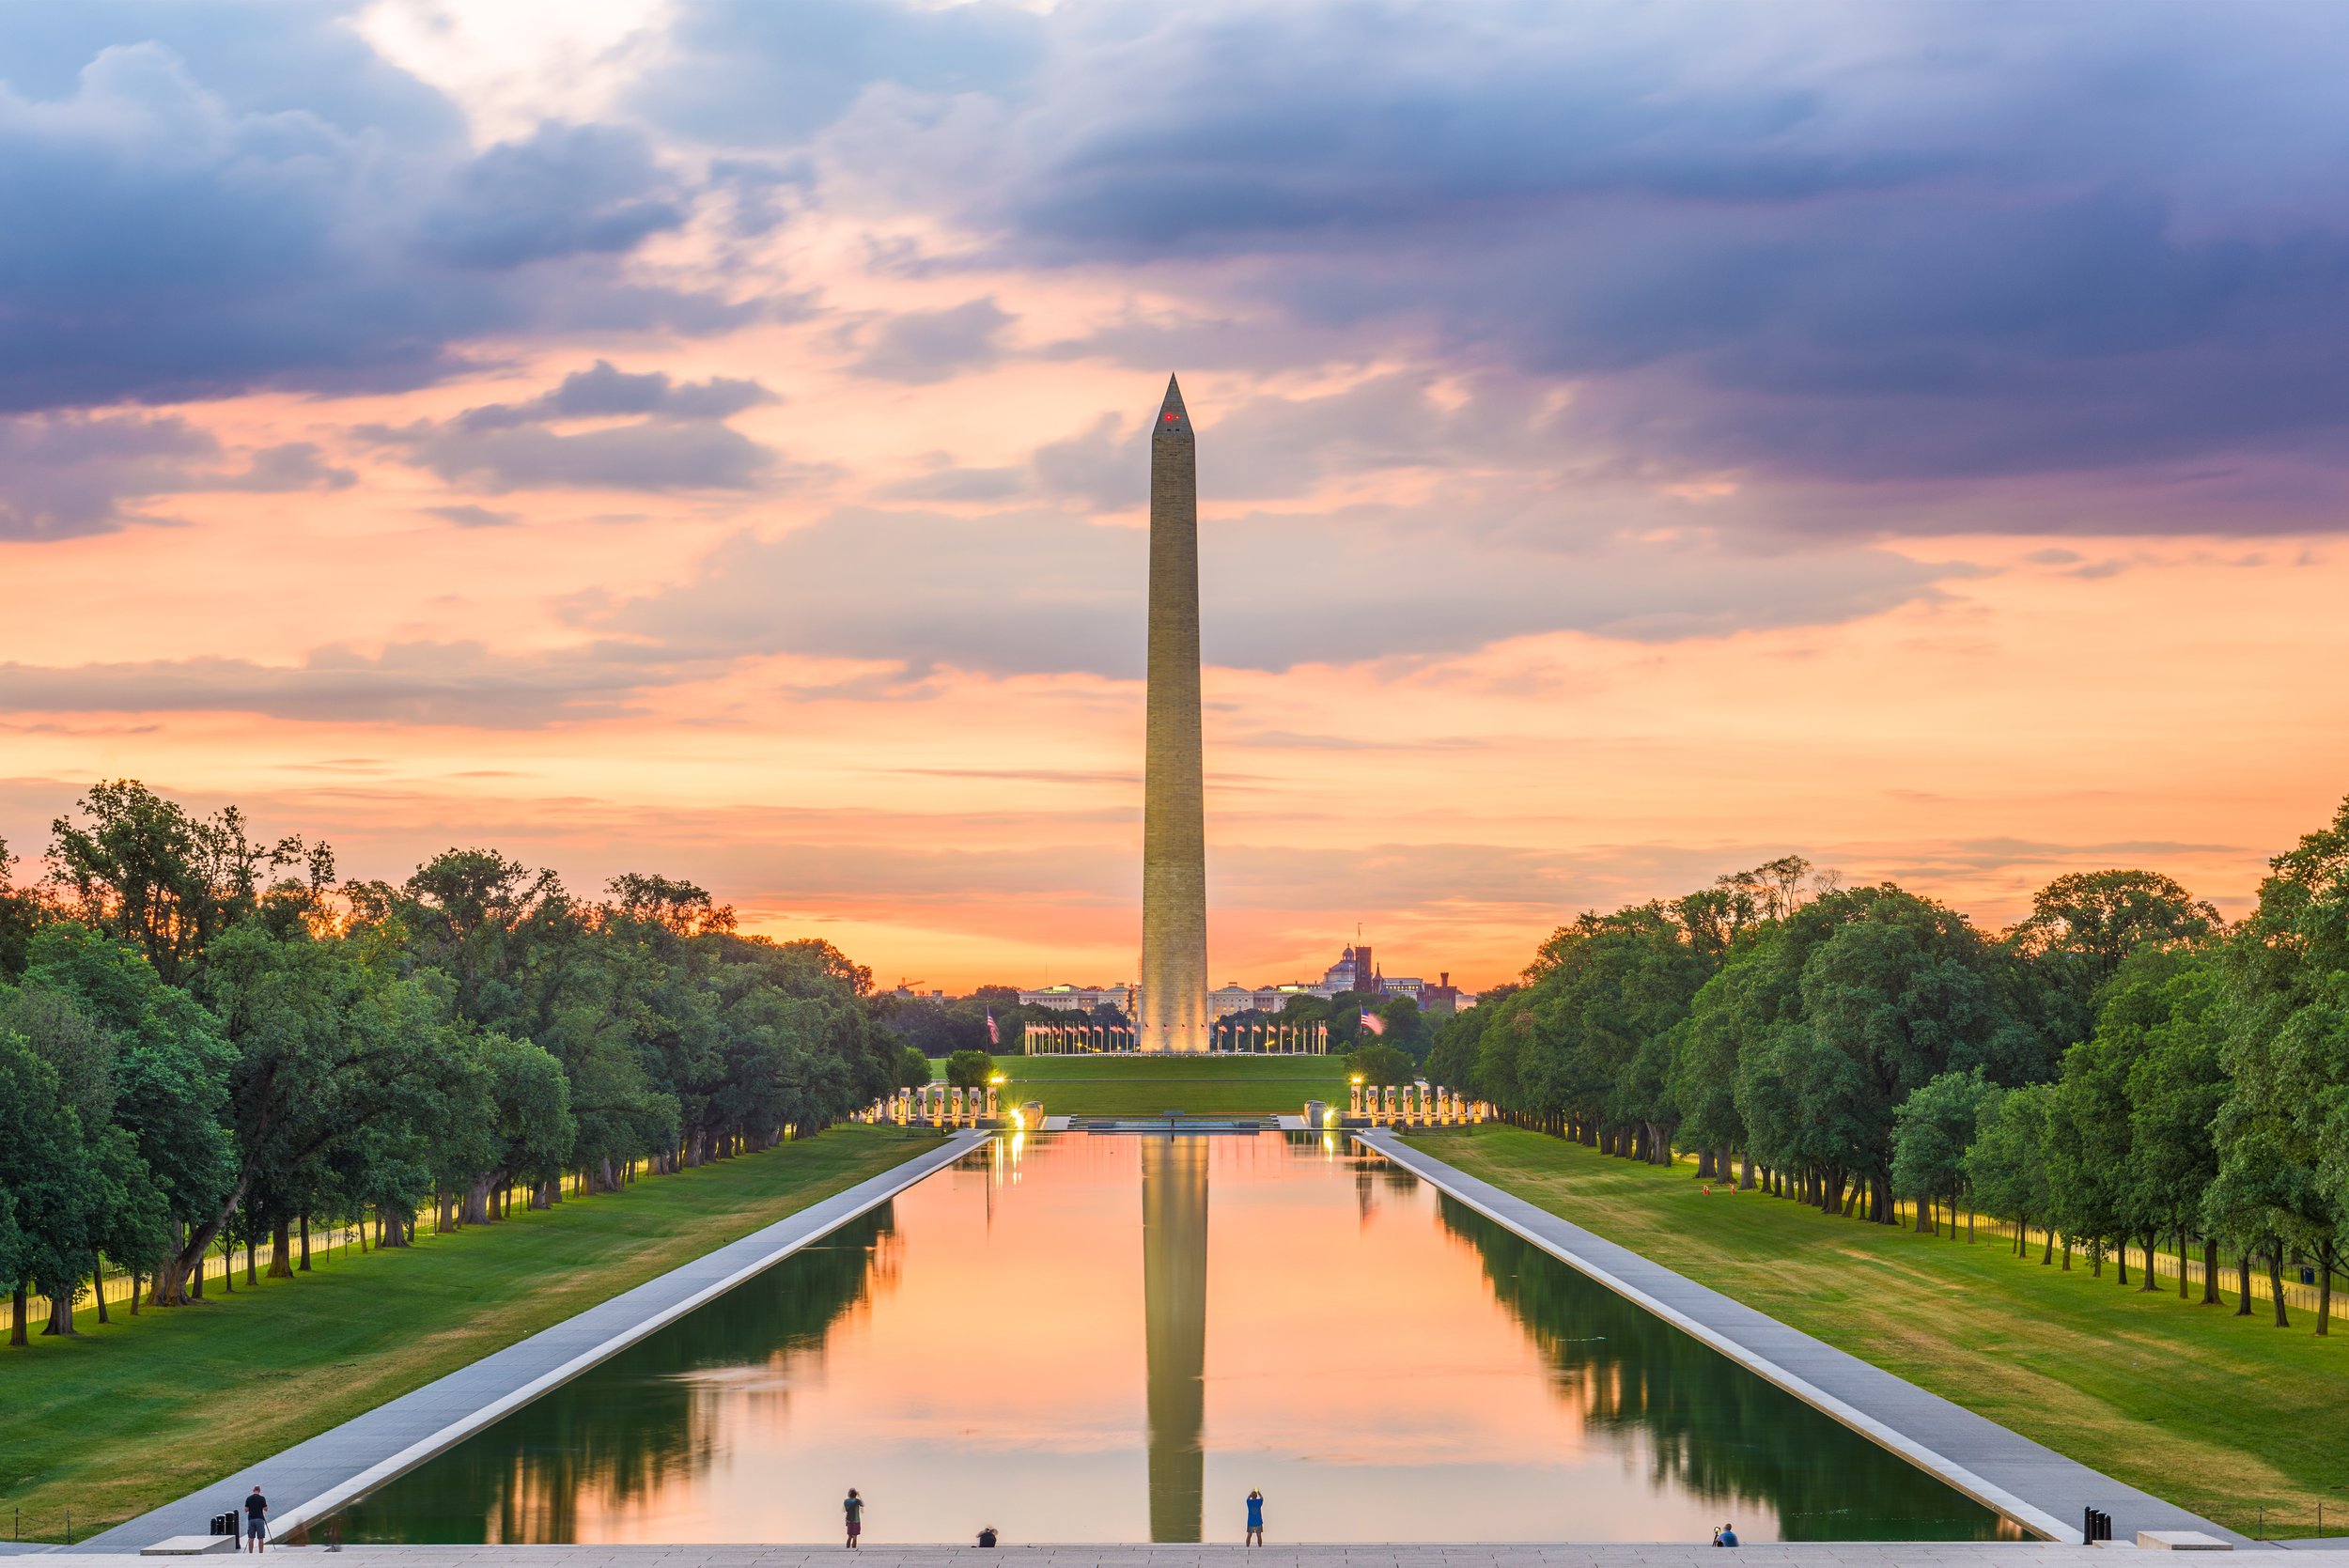 Washington Monument on the Reflecting Pool in Washington, D.C. at dawn.